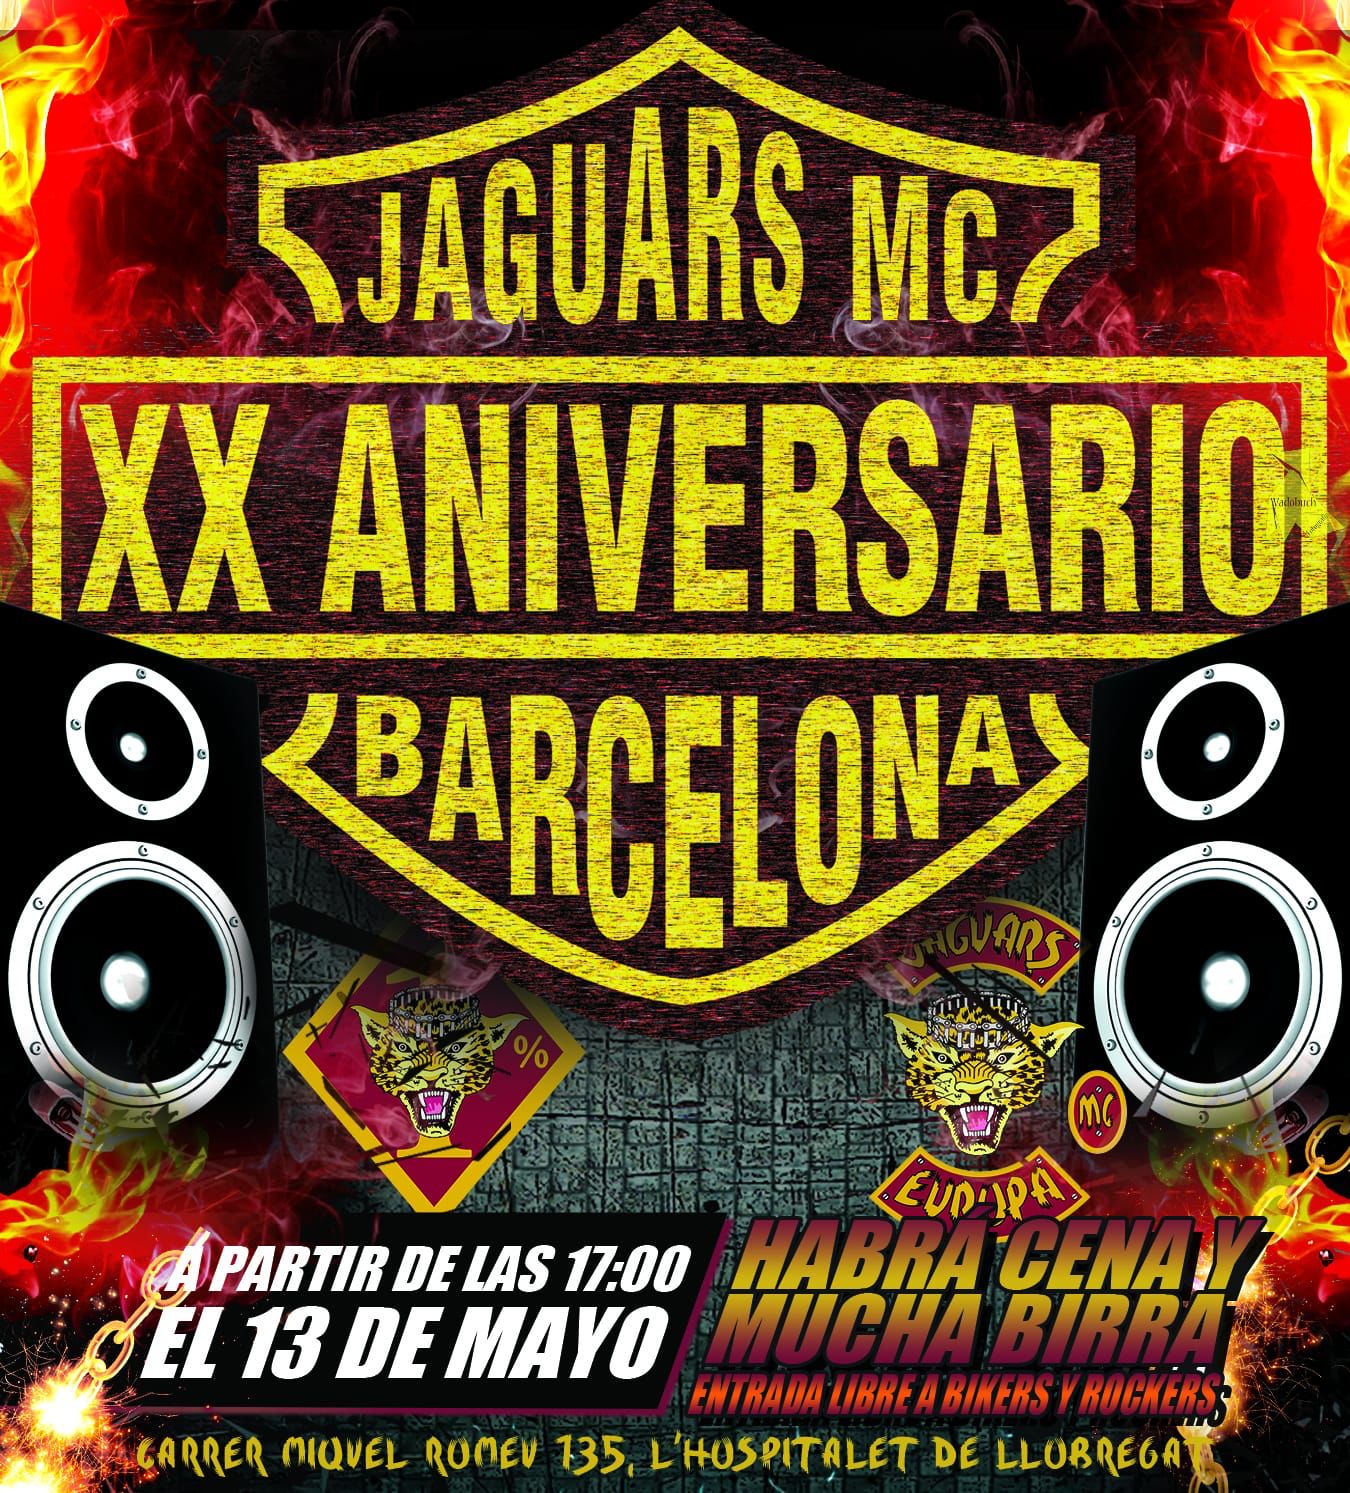 XX Aniversario Jaguars MC Barcelona